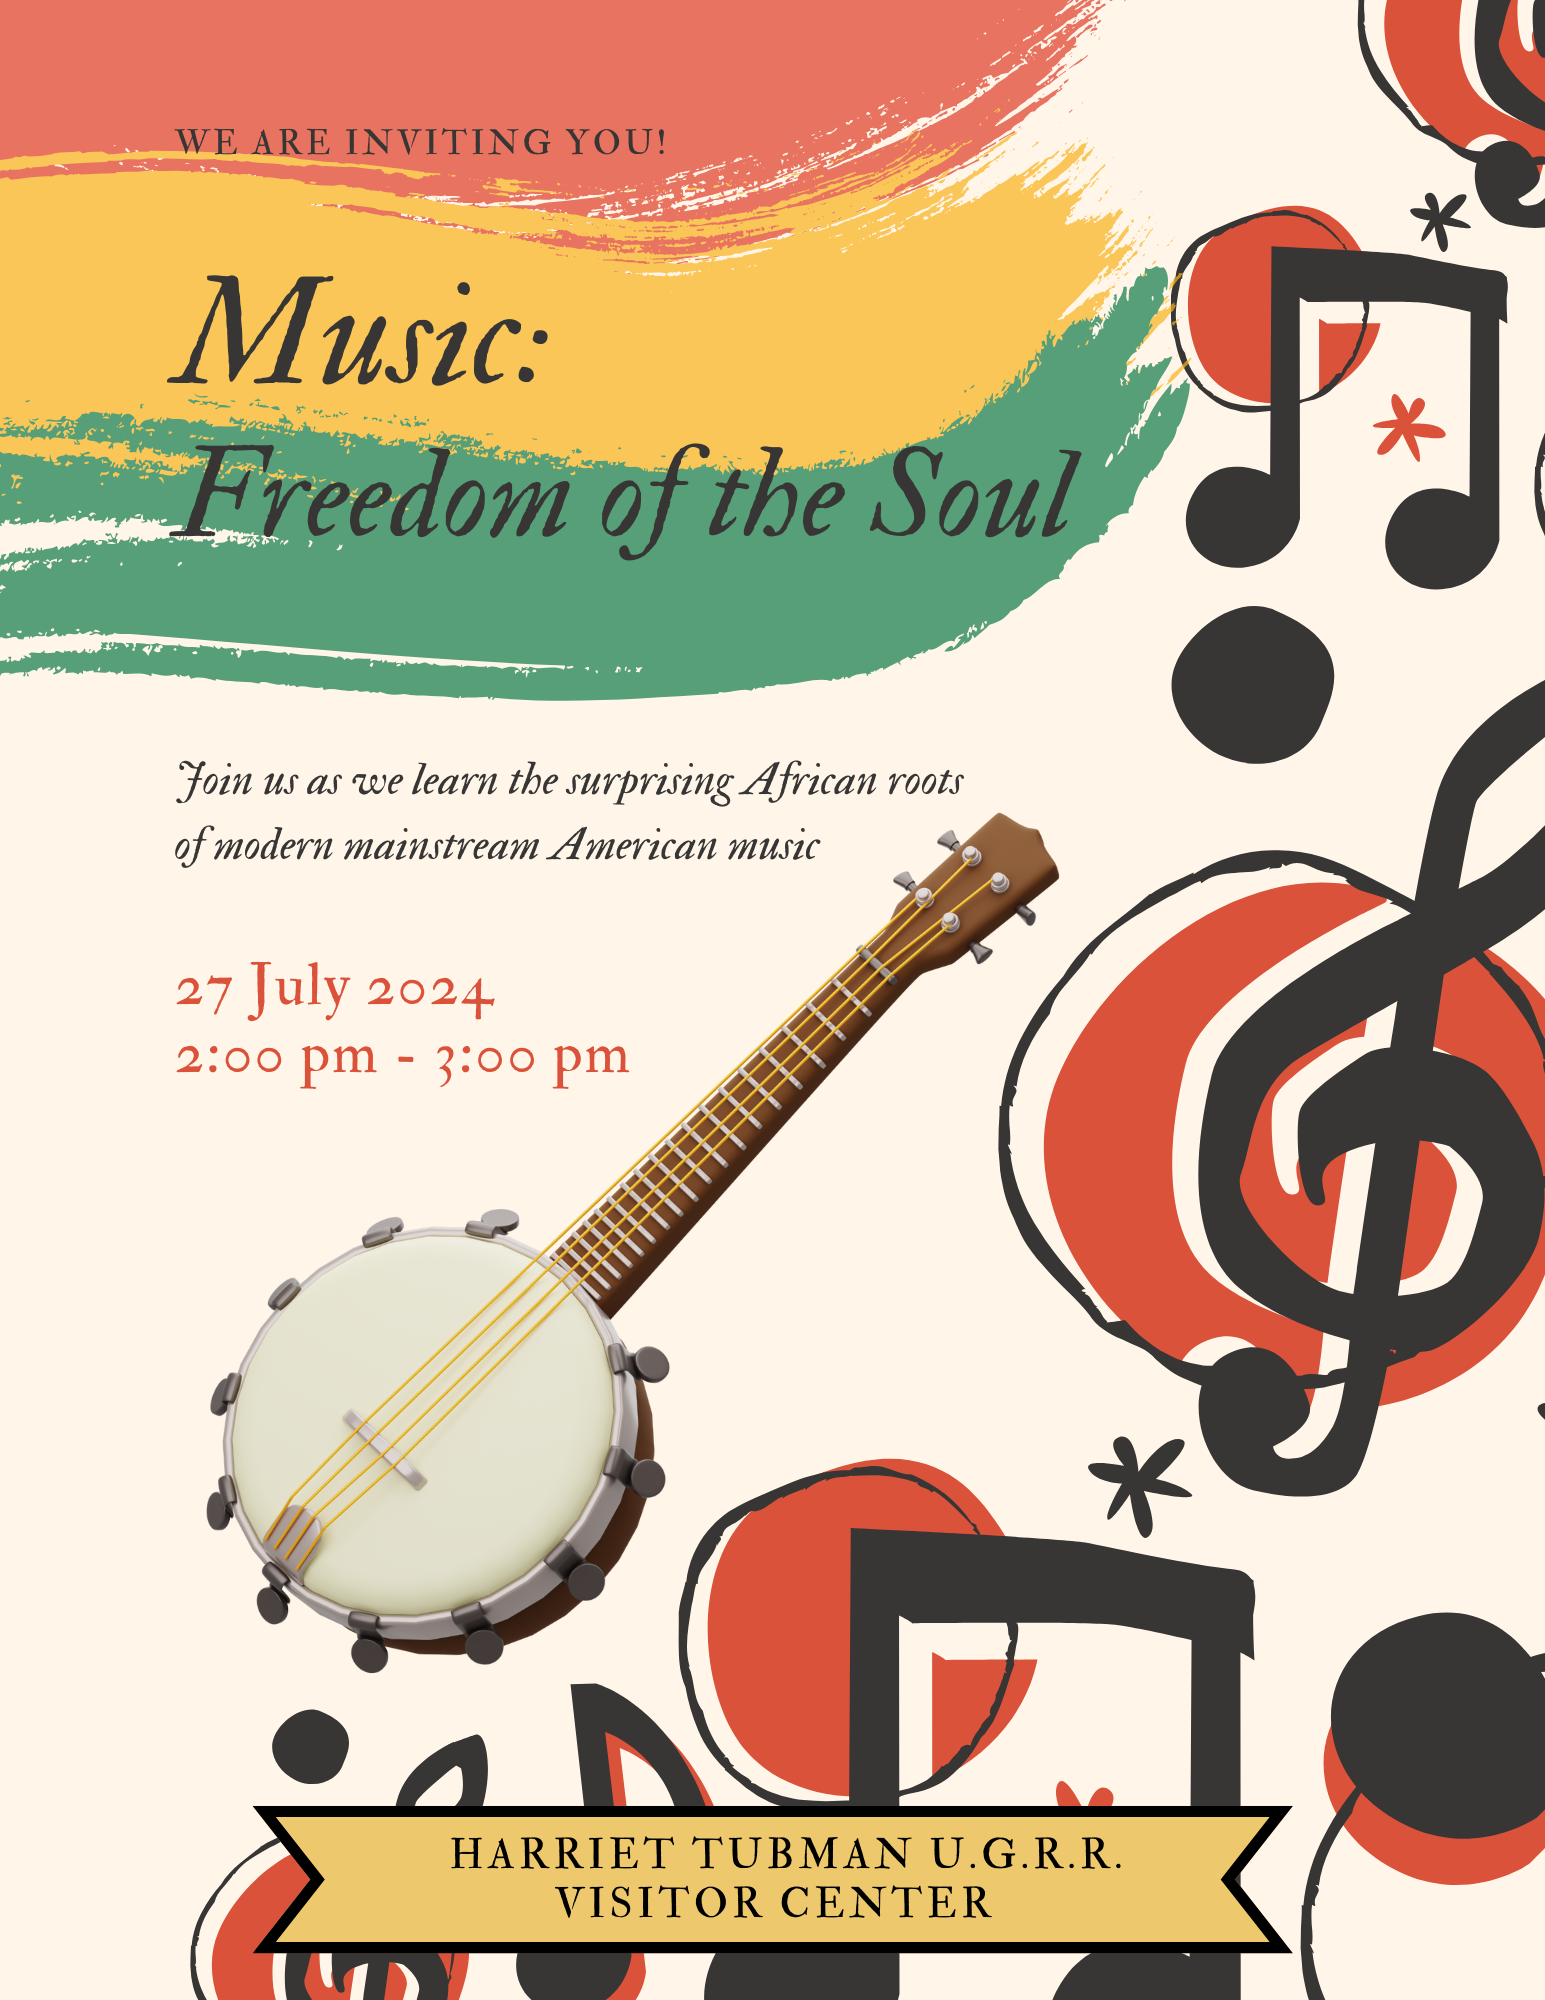 Music program on July 27 at Harriet Tubman Underground Railroad